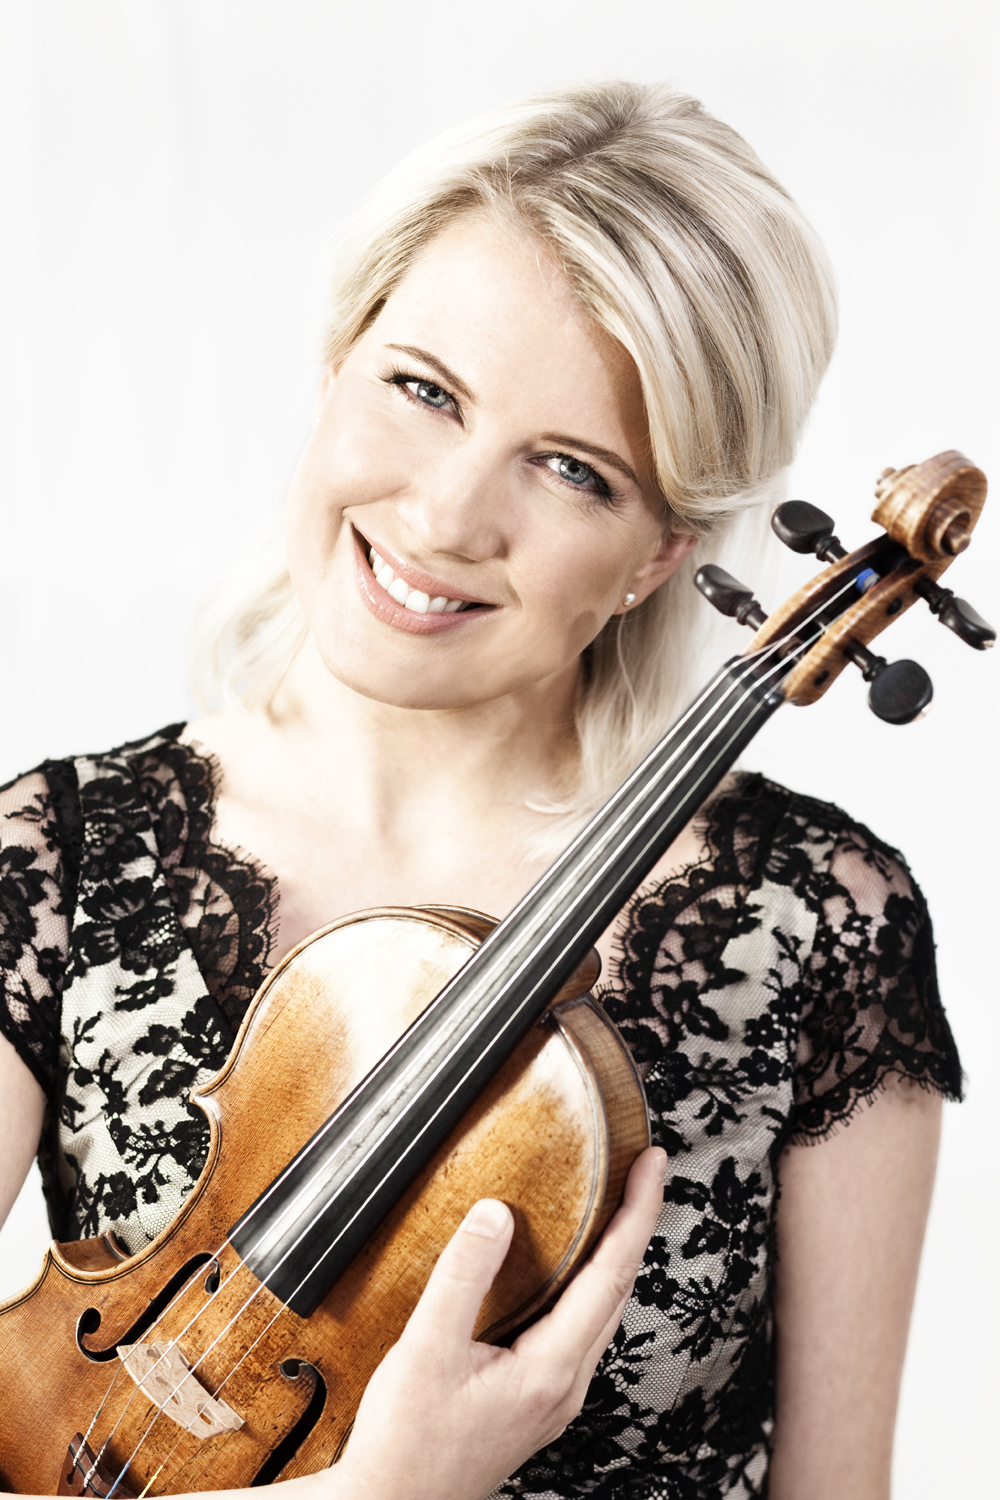 Finnish violinist Elina Vähäla shined in the last Masterworks concert of the season. Courtesy photo